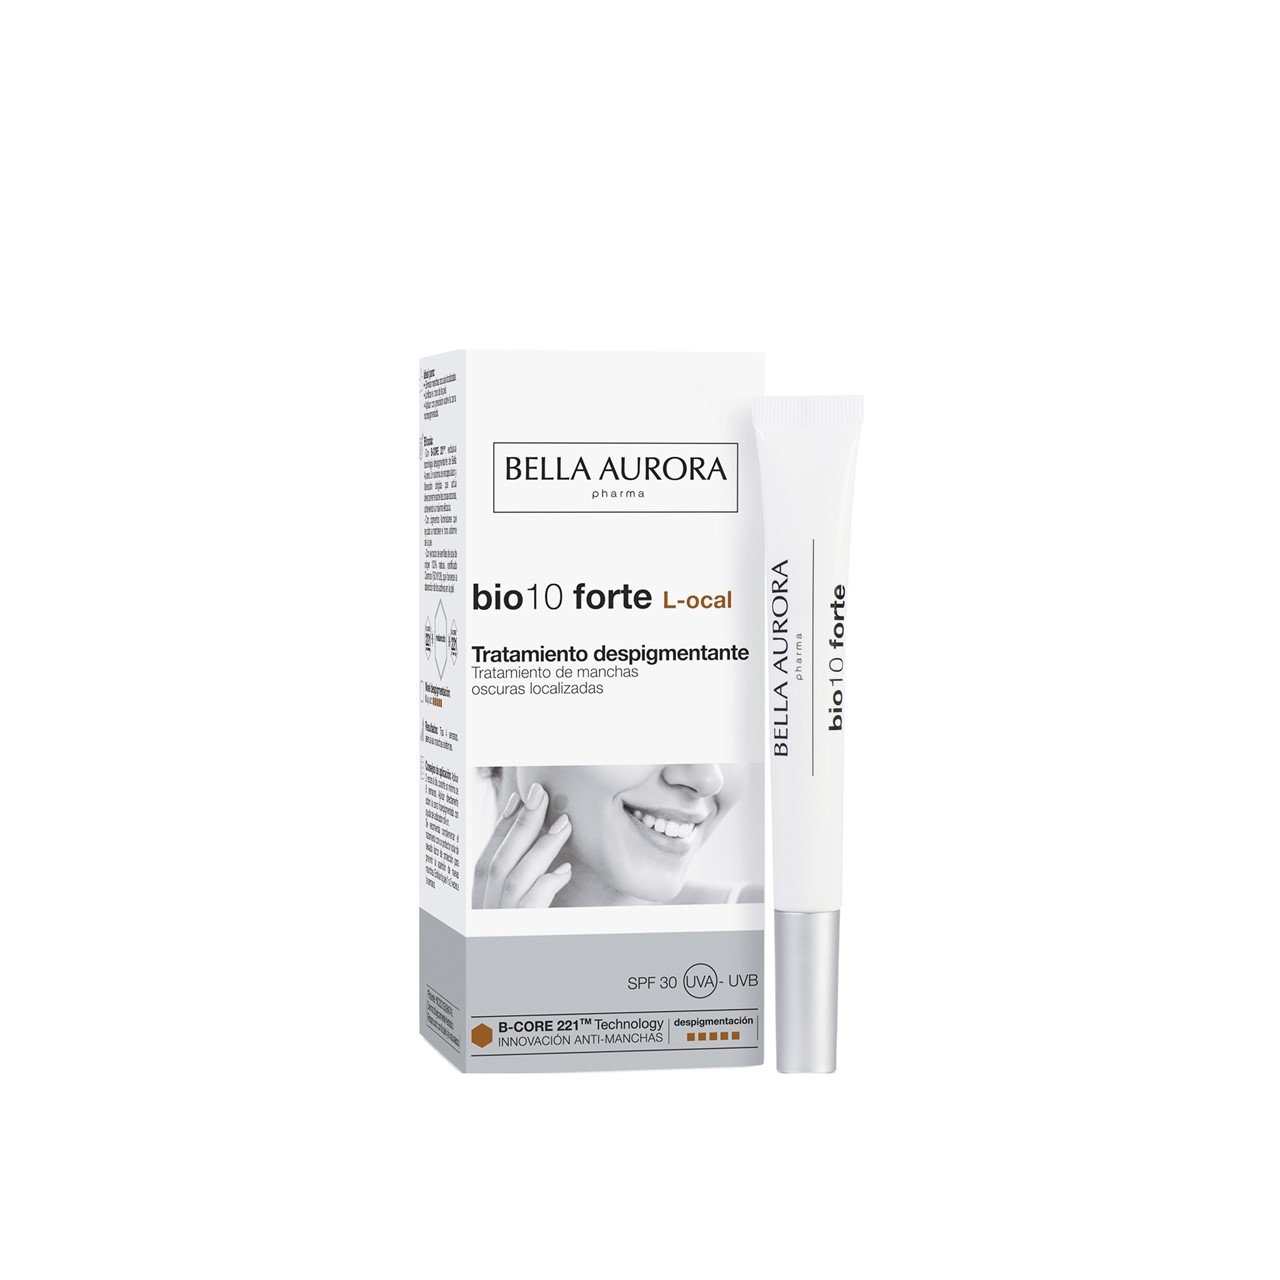 Bella Aurora Bio10 Forte L-ocal Depigmenting Treatment 9ml